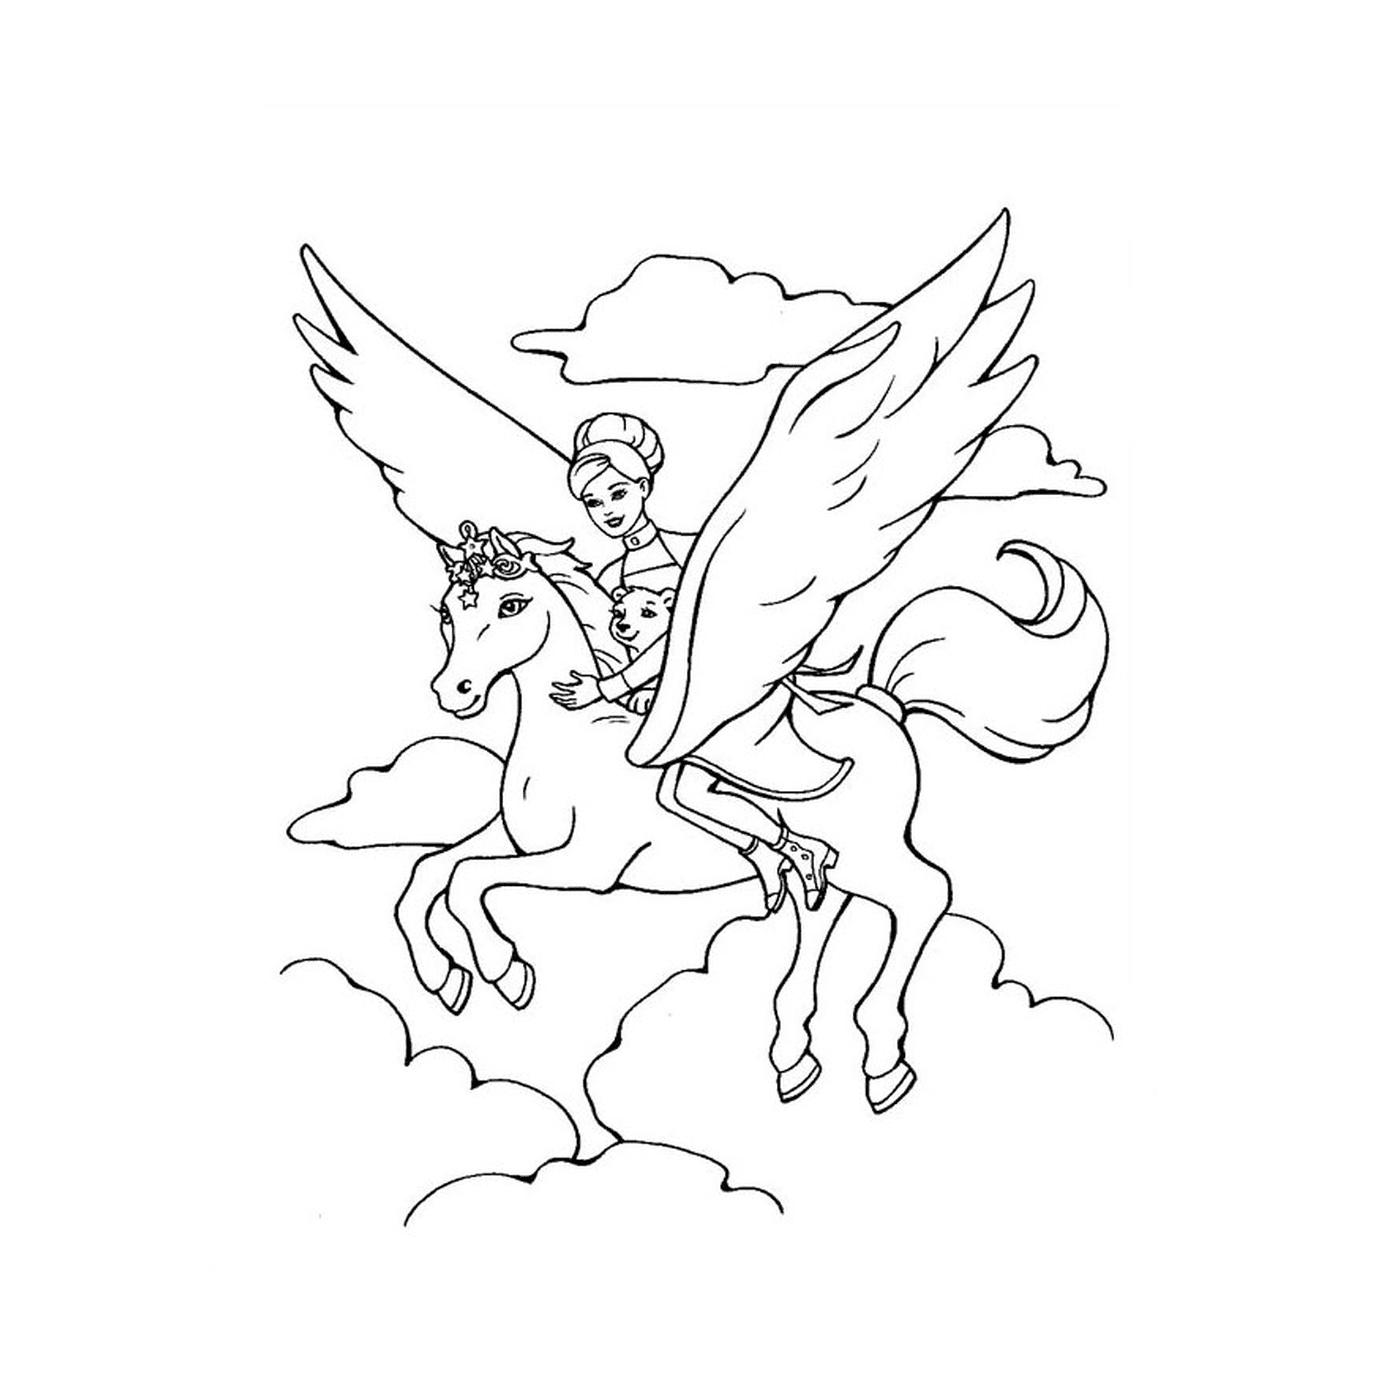  (باربي) والحصان السحري مع ملاك يركب حصاناً 